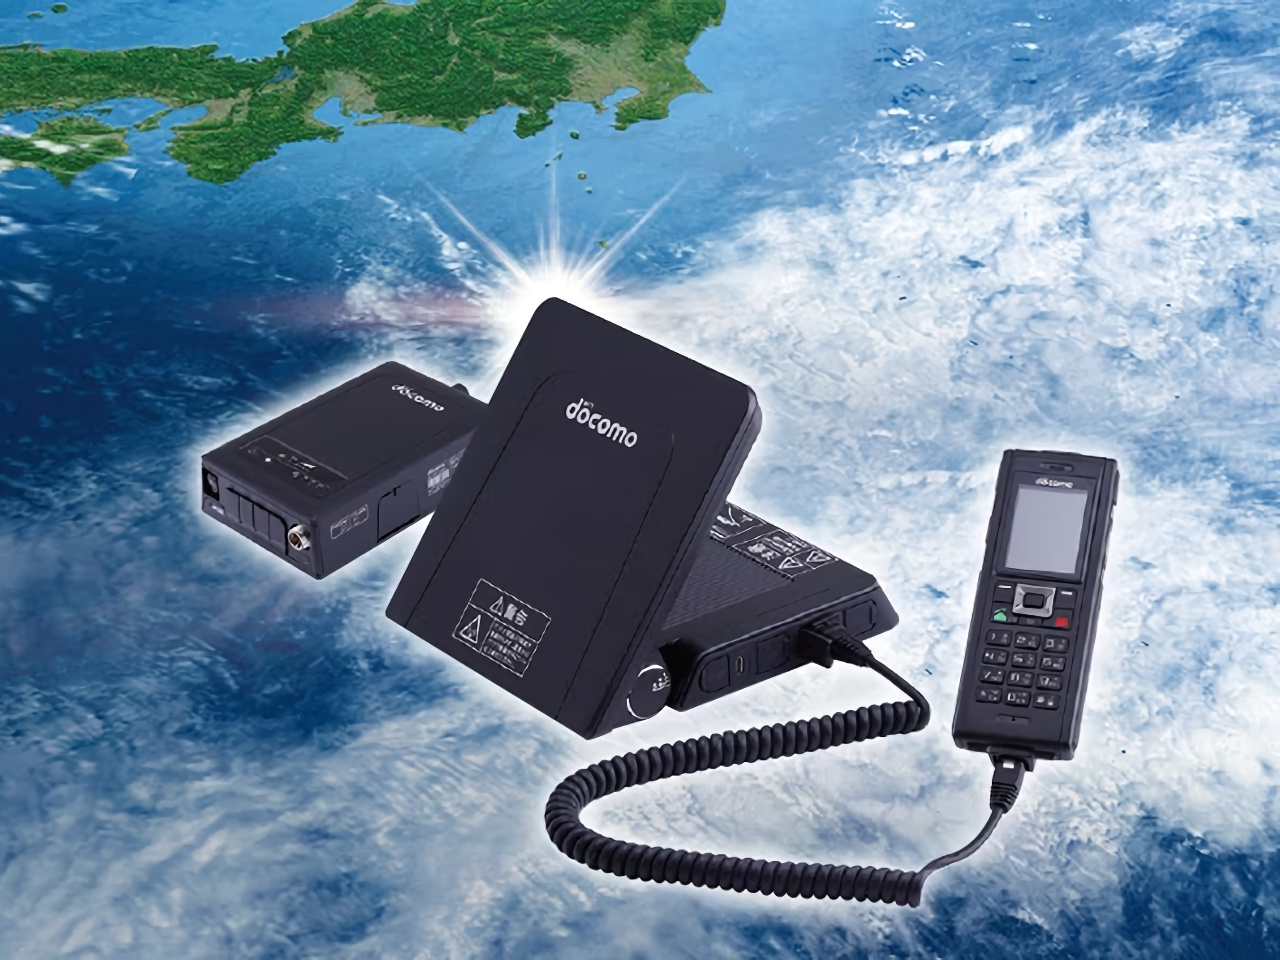 NTTドコモ、衛星電話サービス「ワイドスターIII」を10月から提供--測位にも対応